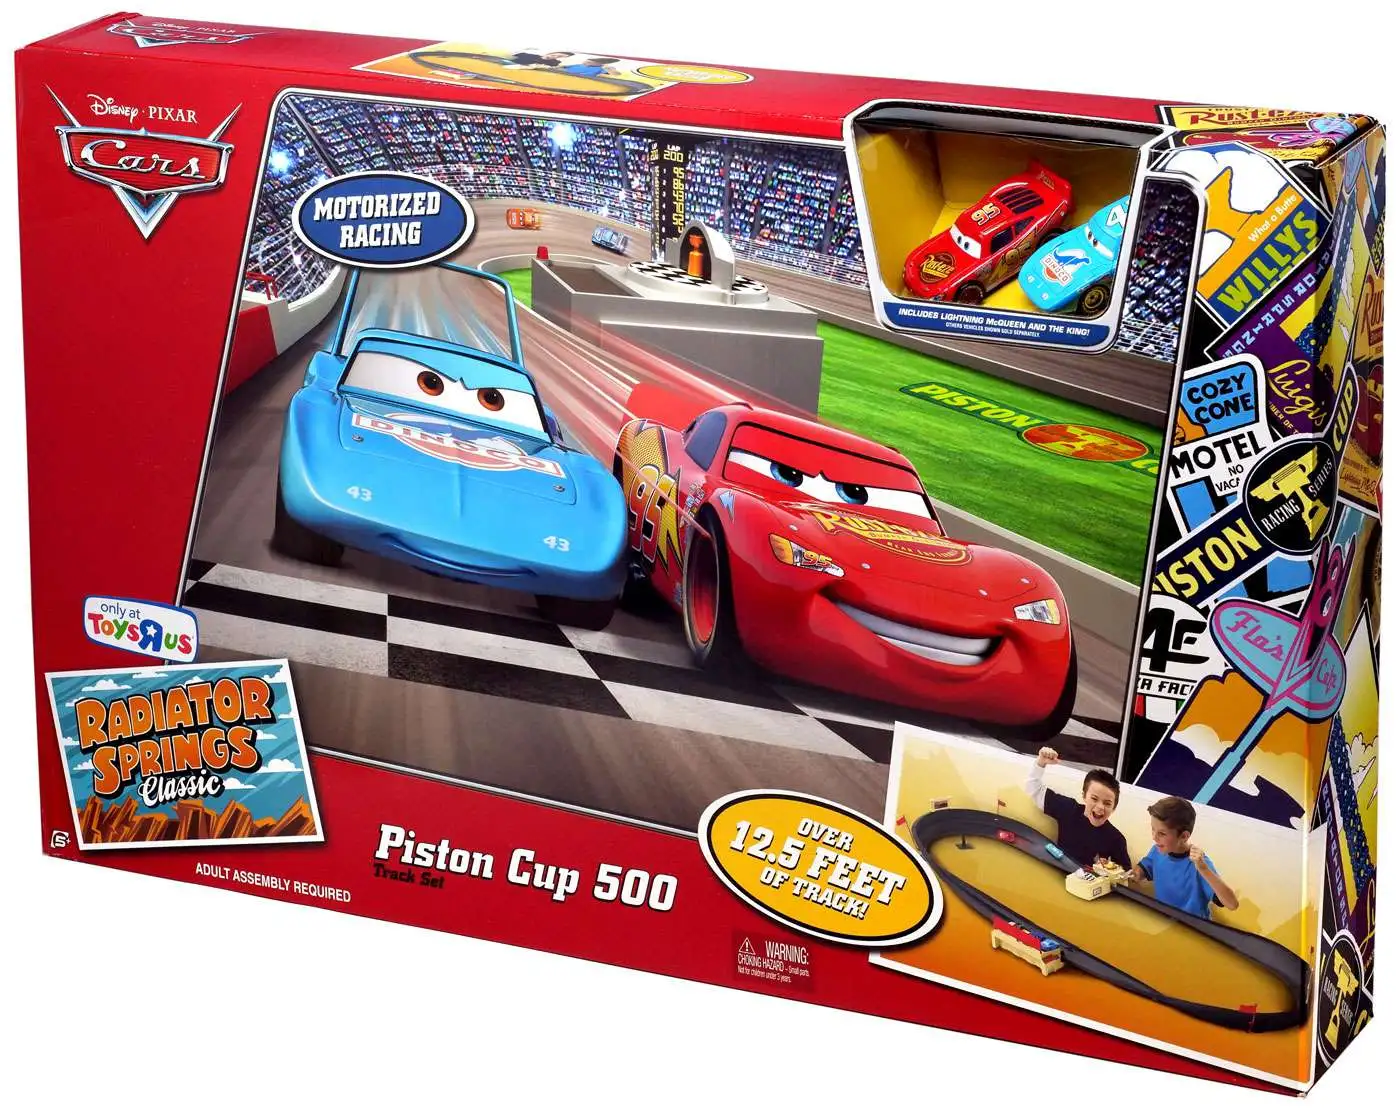 Radiator Springs Track Pack Disney/Pixar Cars Story Sets 